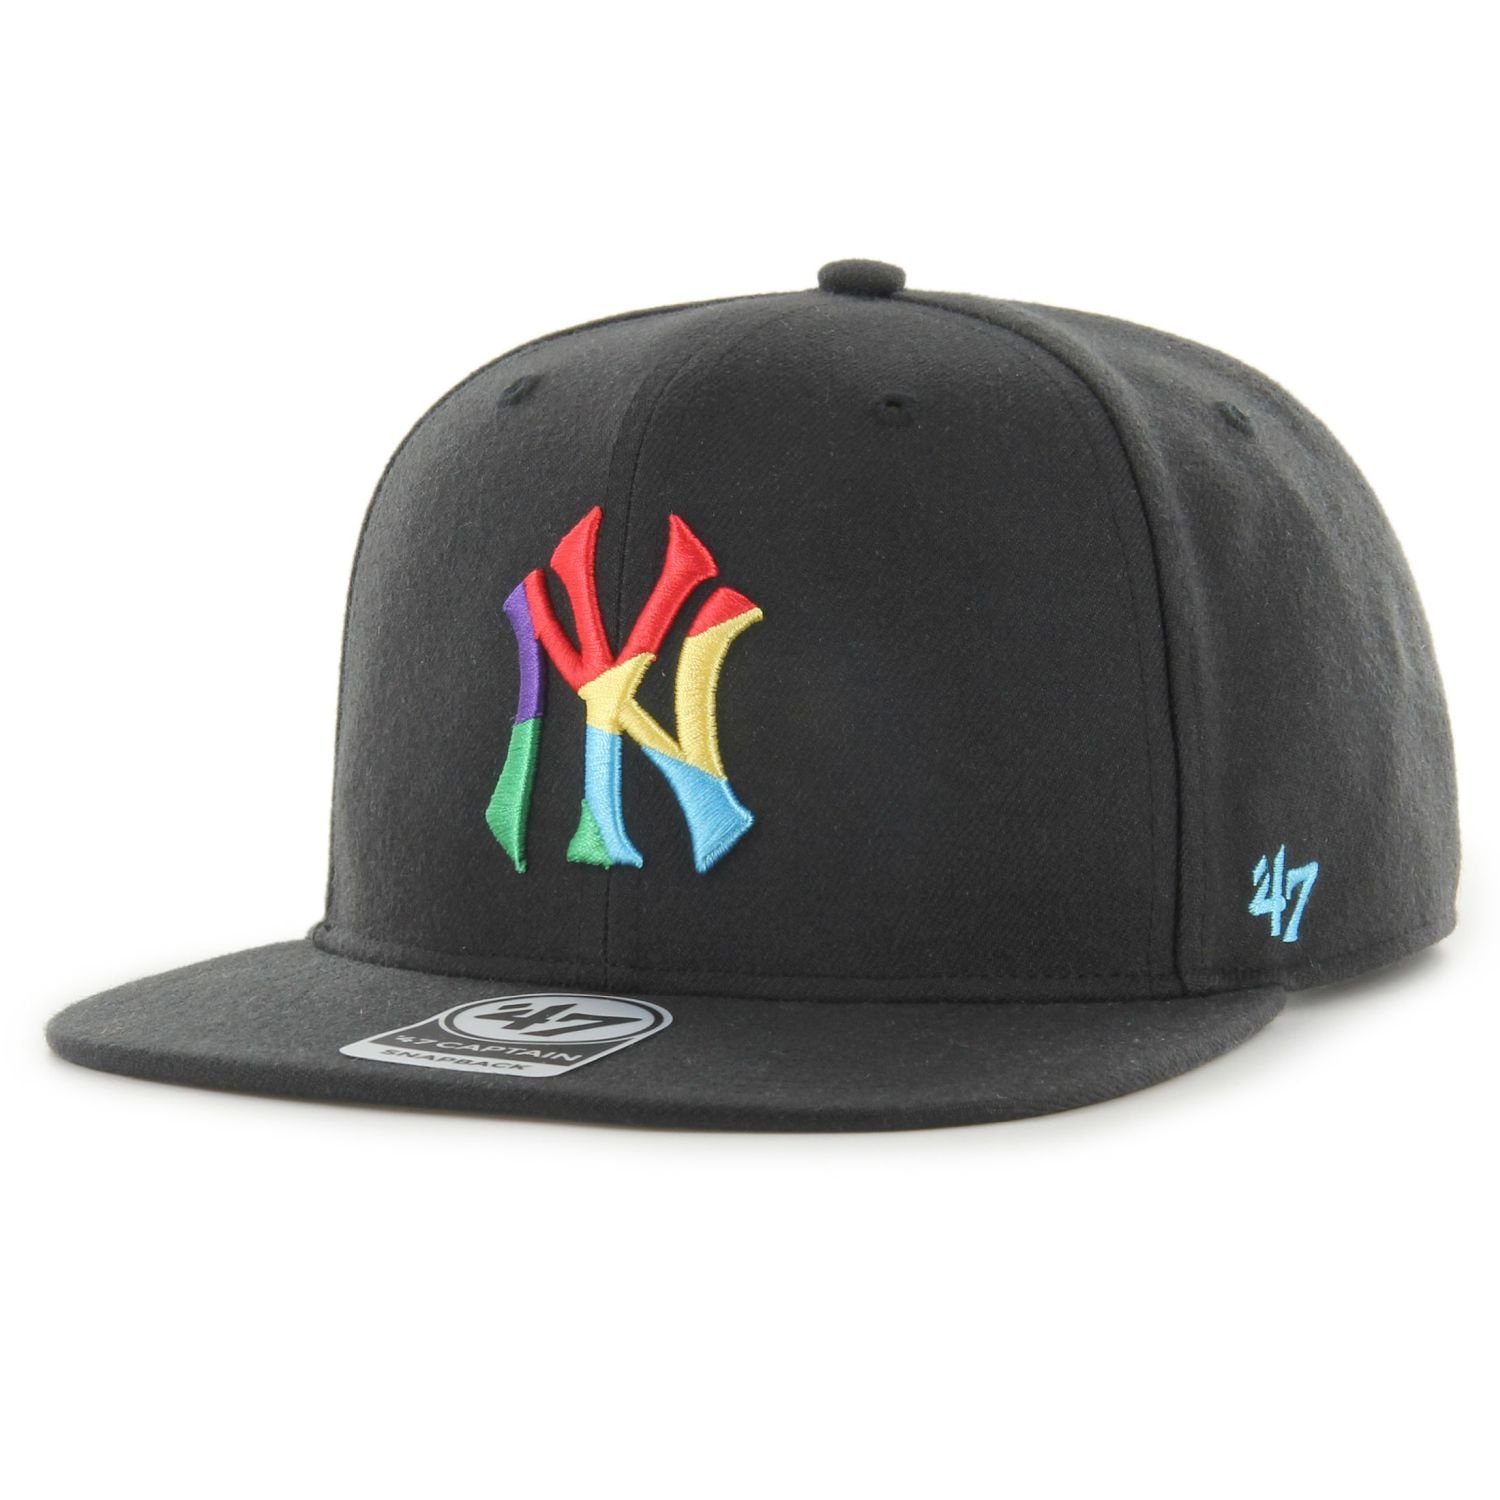 '47 Brand Snapback Cap CAPTAIN New York Yankees fractal